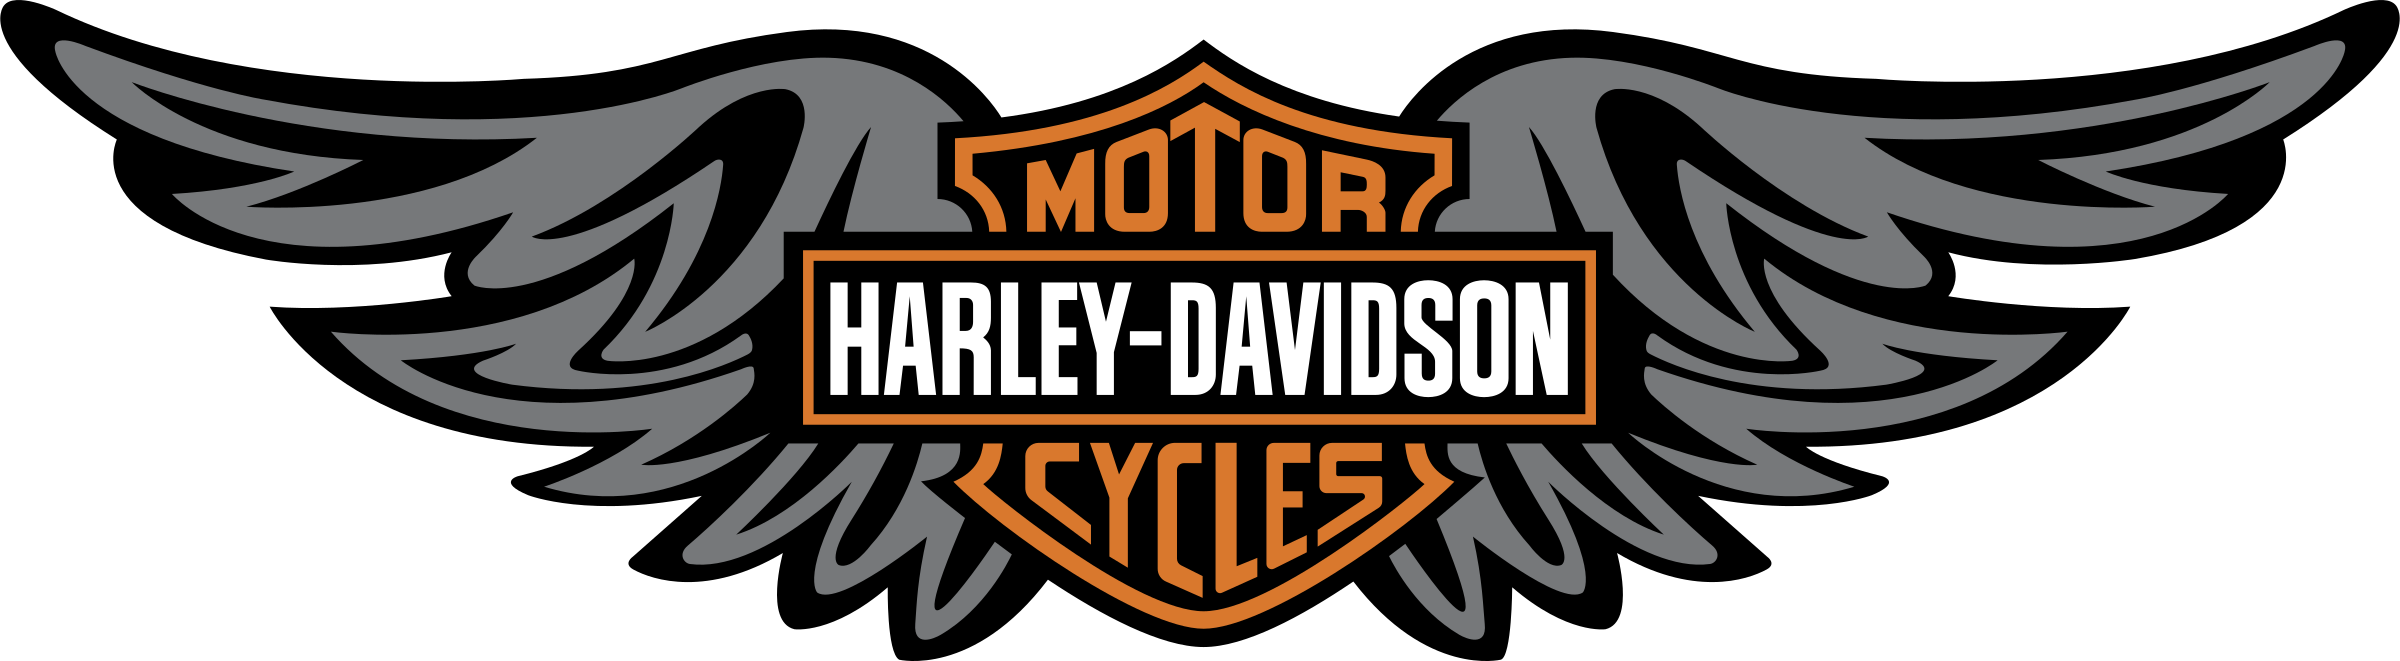 Printable Harley Davidson Logo Customize And Print